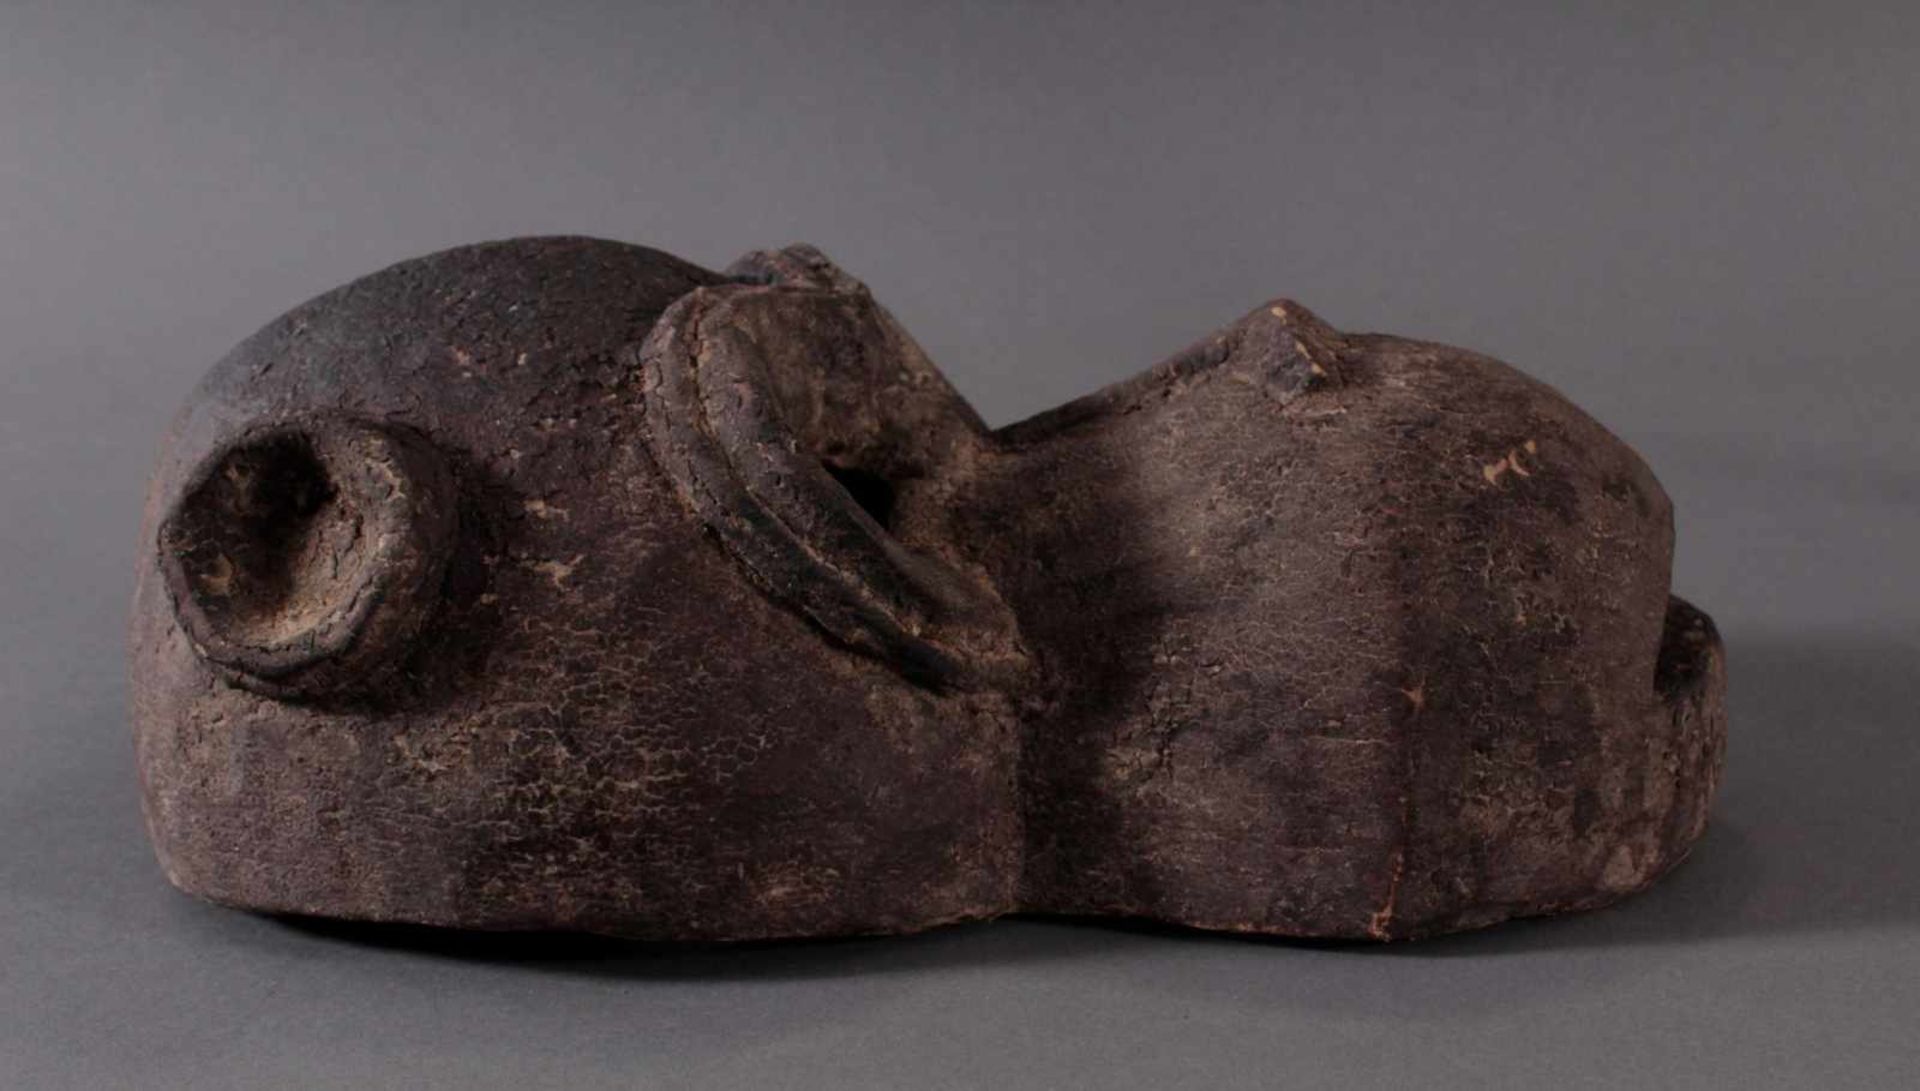 Antike große Zoomorphe Maske. SeltenSchweres Hartholz, schwarze Patina darüber schwarze Kruste, - Bild 2 aus 5